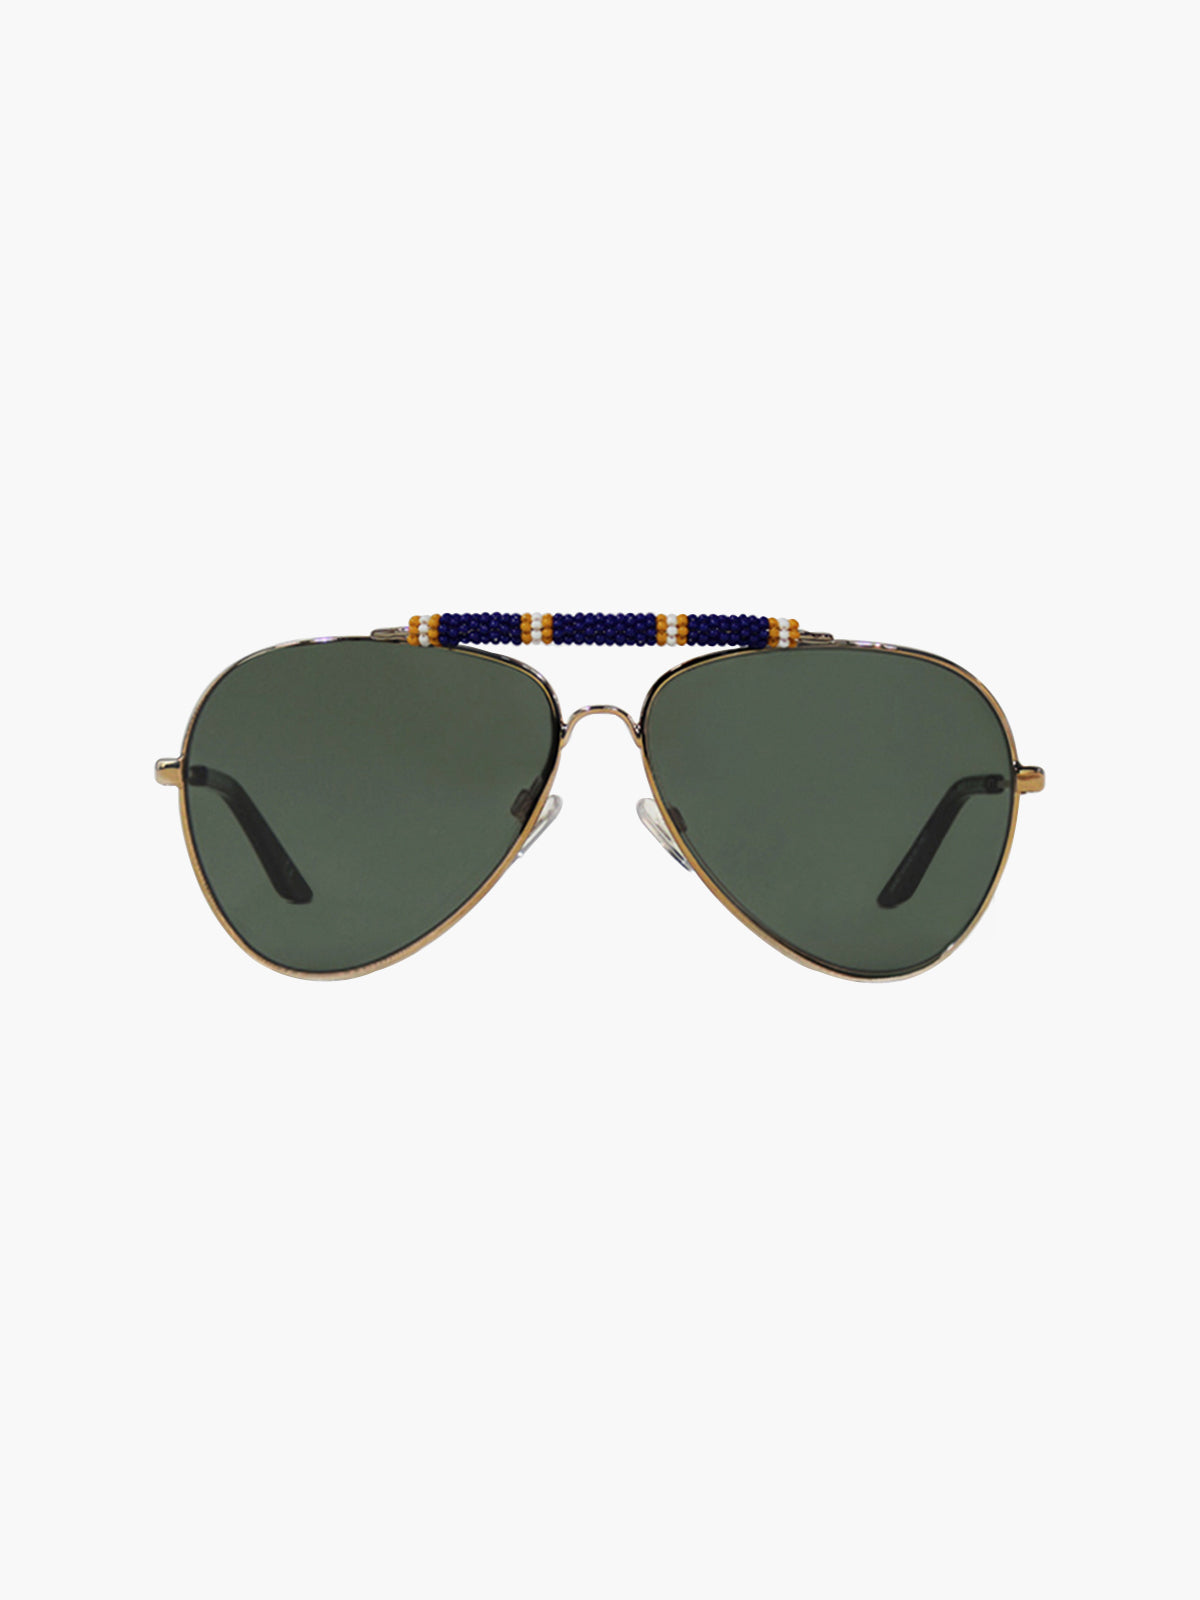 Exclusive Sunglasses | Blue/Yellow - Fashionkind